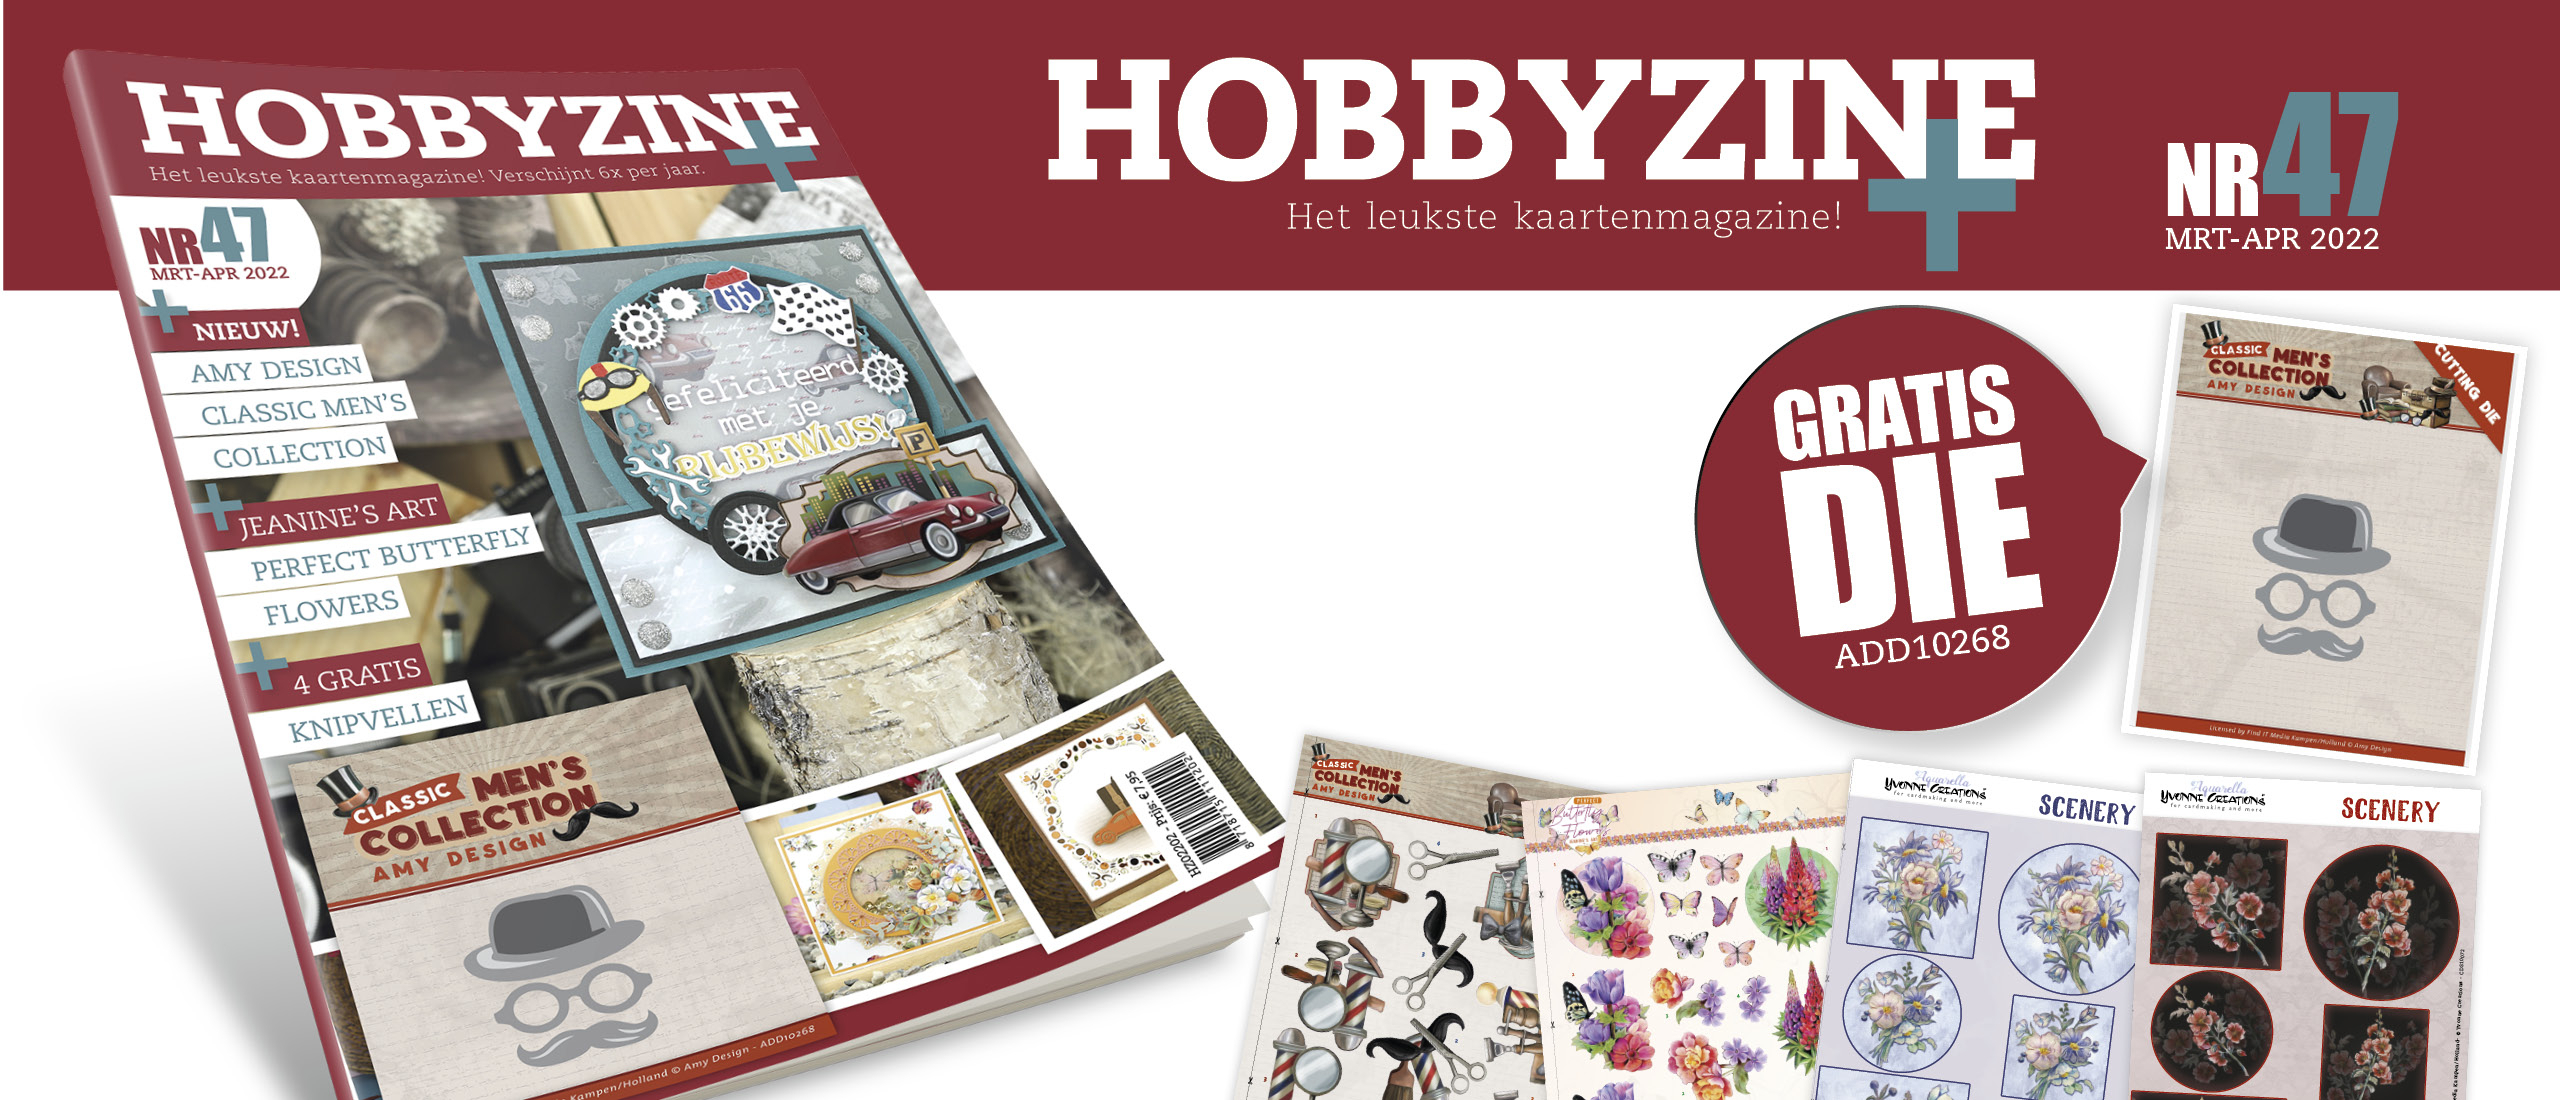 Gratis extra's bij hobbyzine plus 47: gratis snijmal!